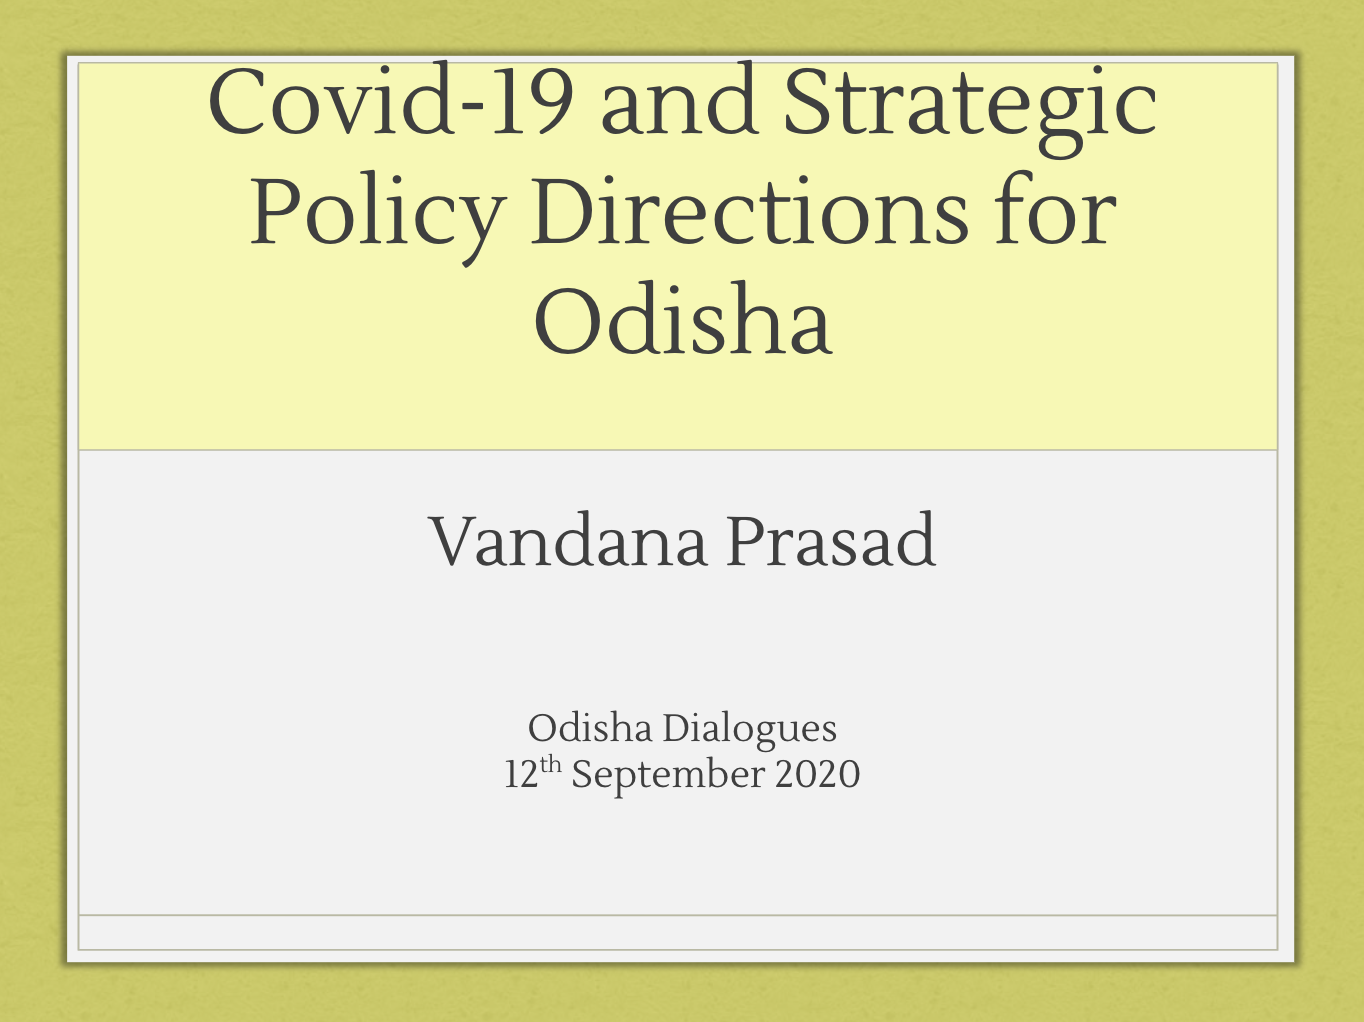 COVID-19 and Strategic Policy Directions for Odisha by Vandana Prasad, Advisor, Public Health Resources Network